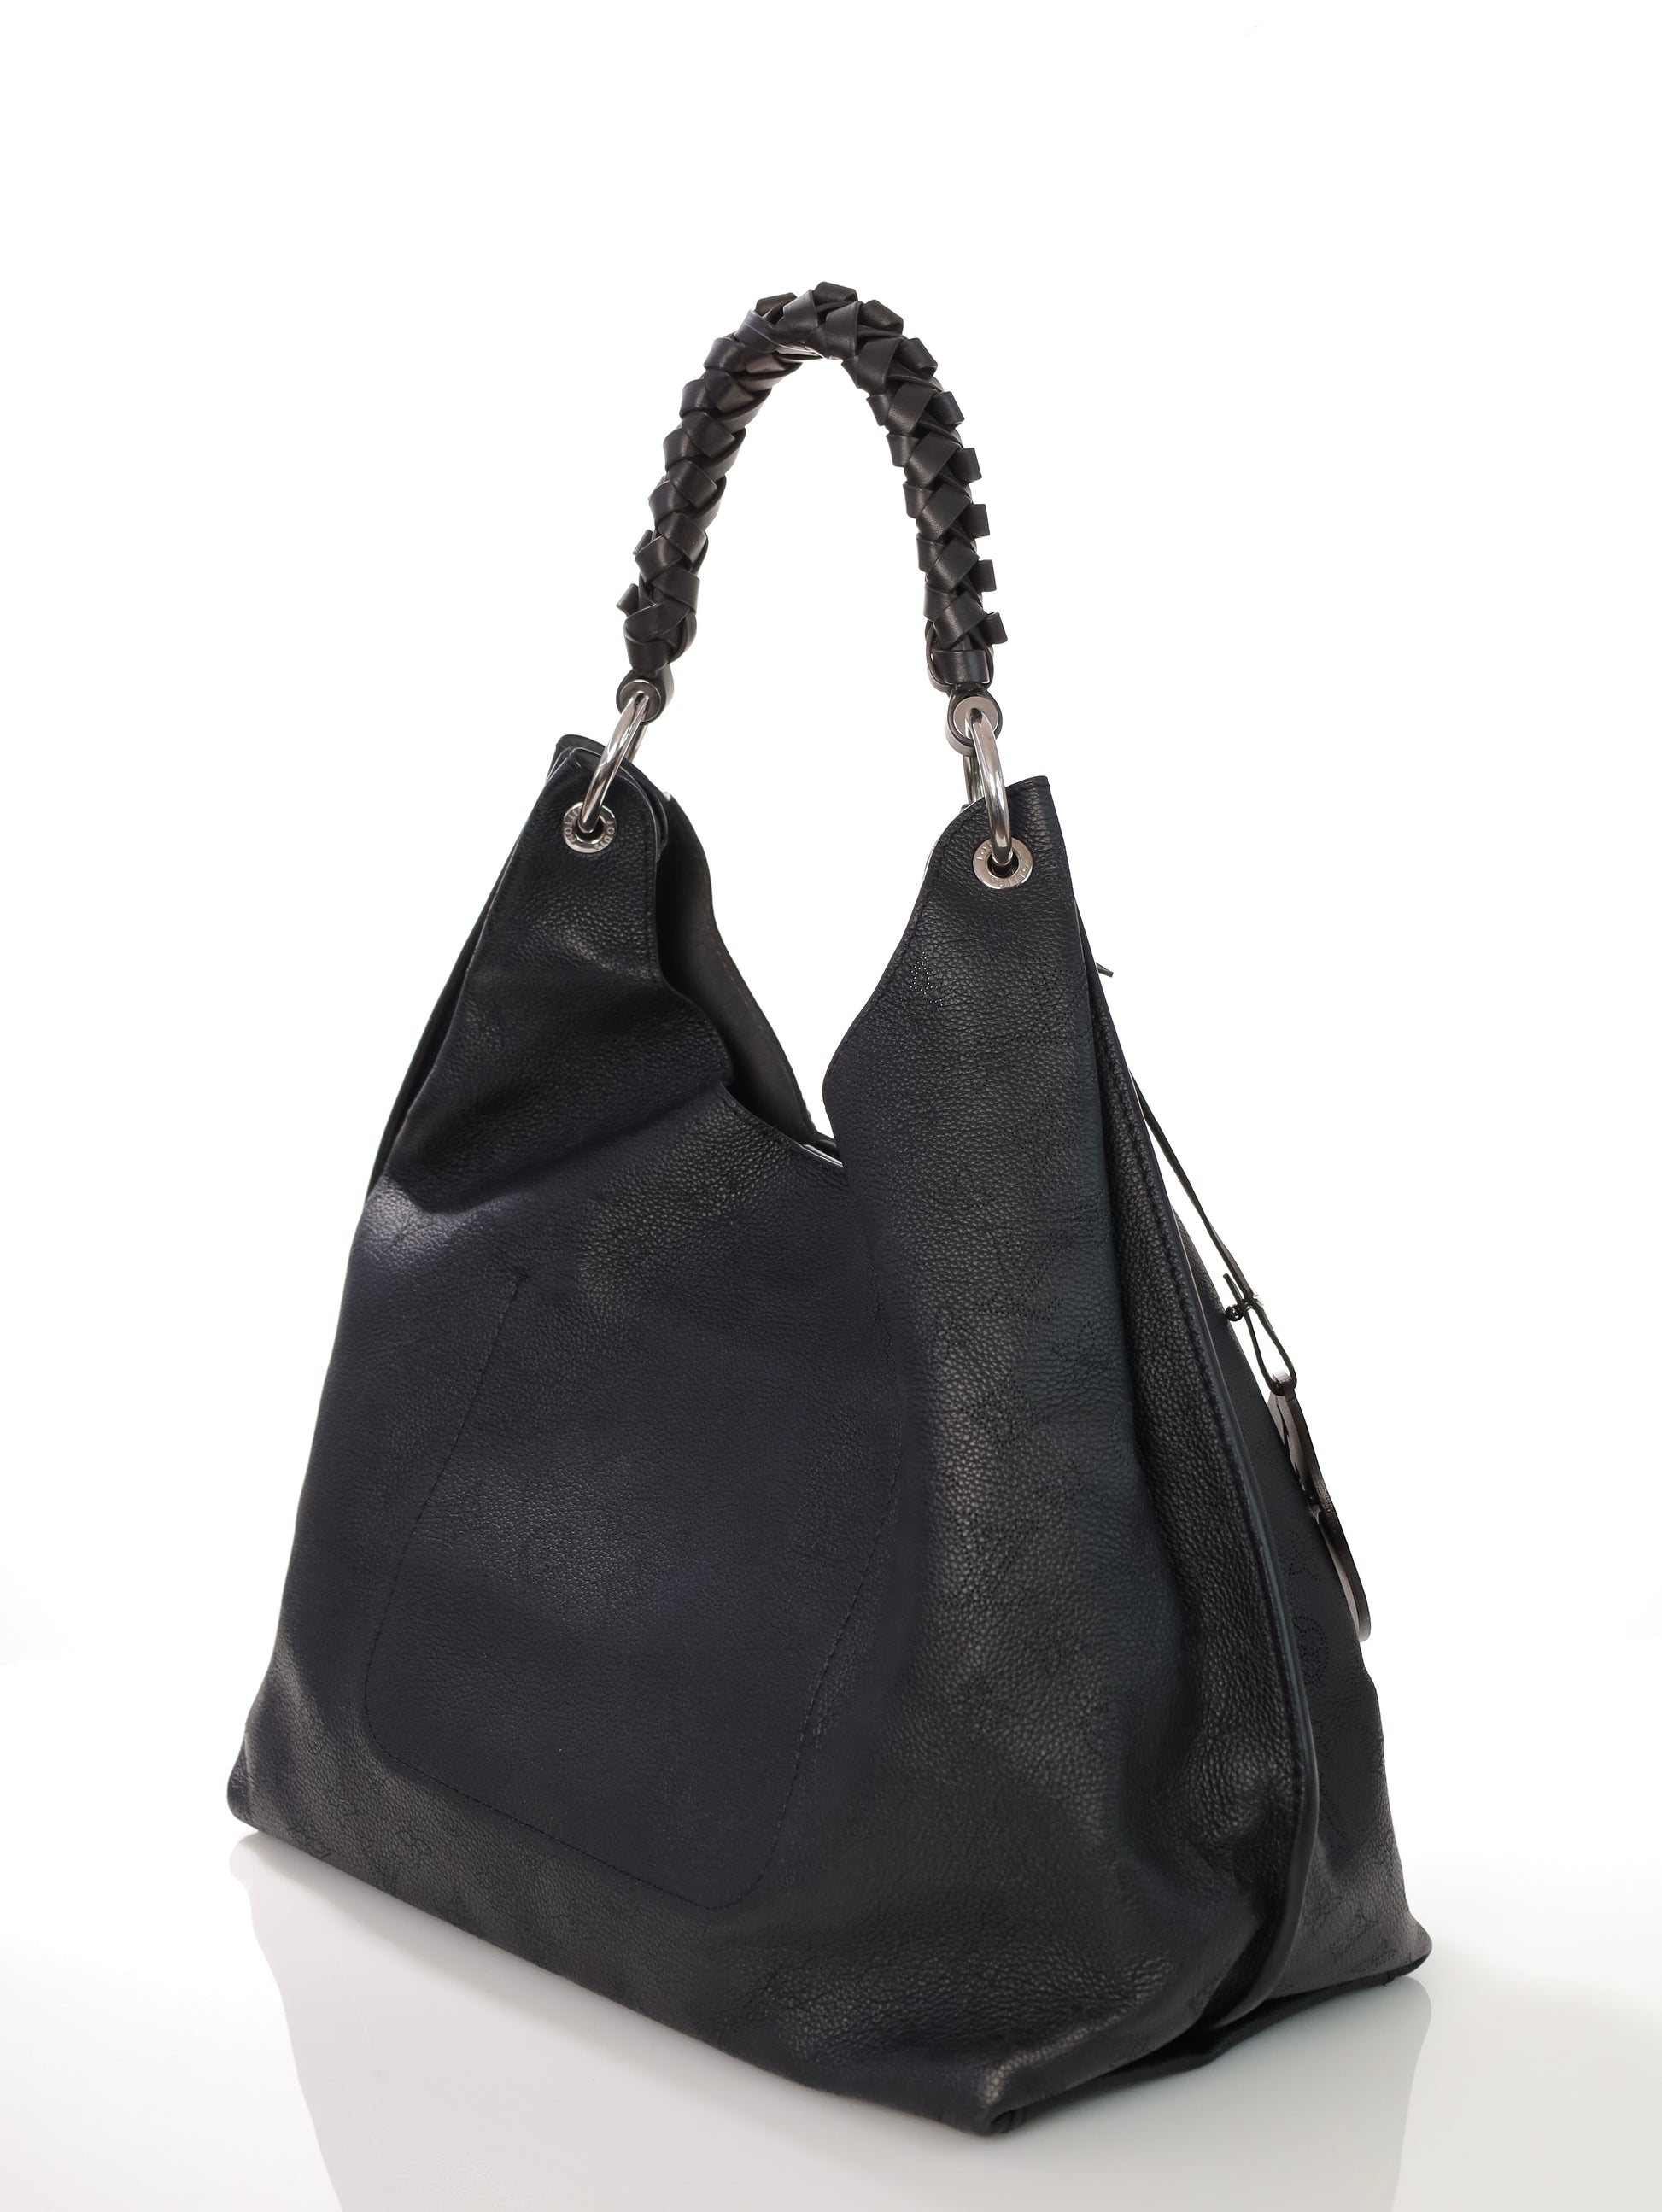 LOUIS VUITTON Carmel M53188 Mahina Shopper Monogram Hobo Bag